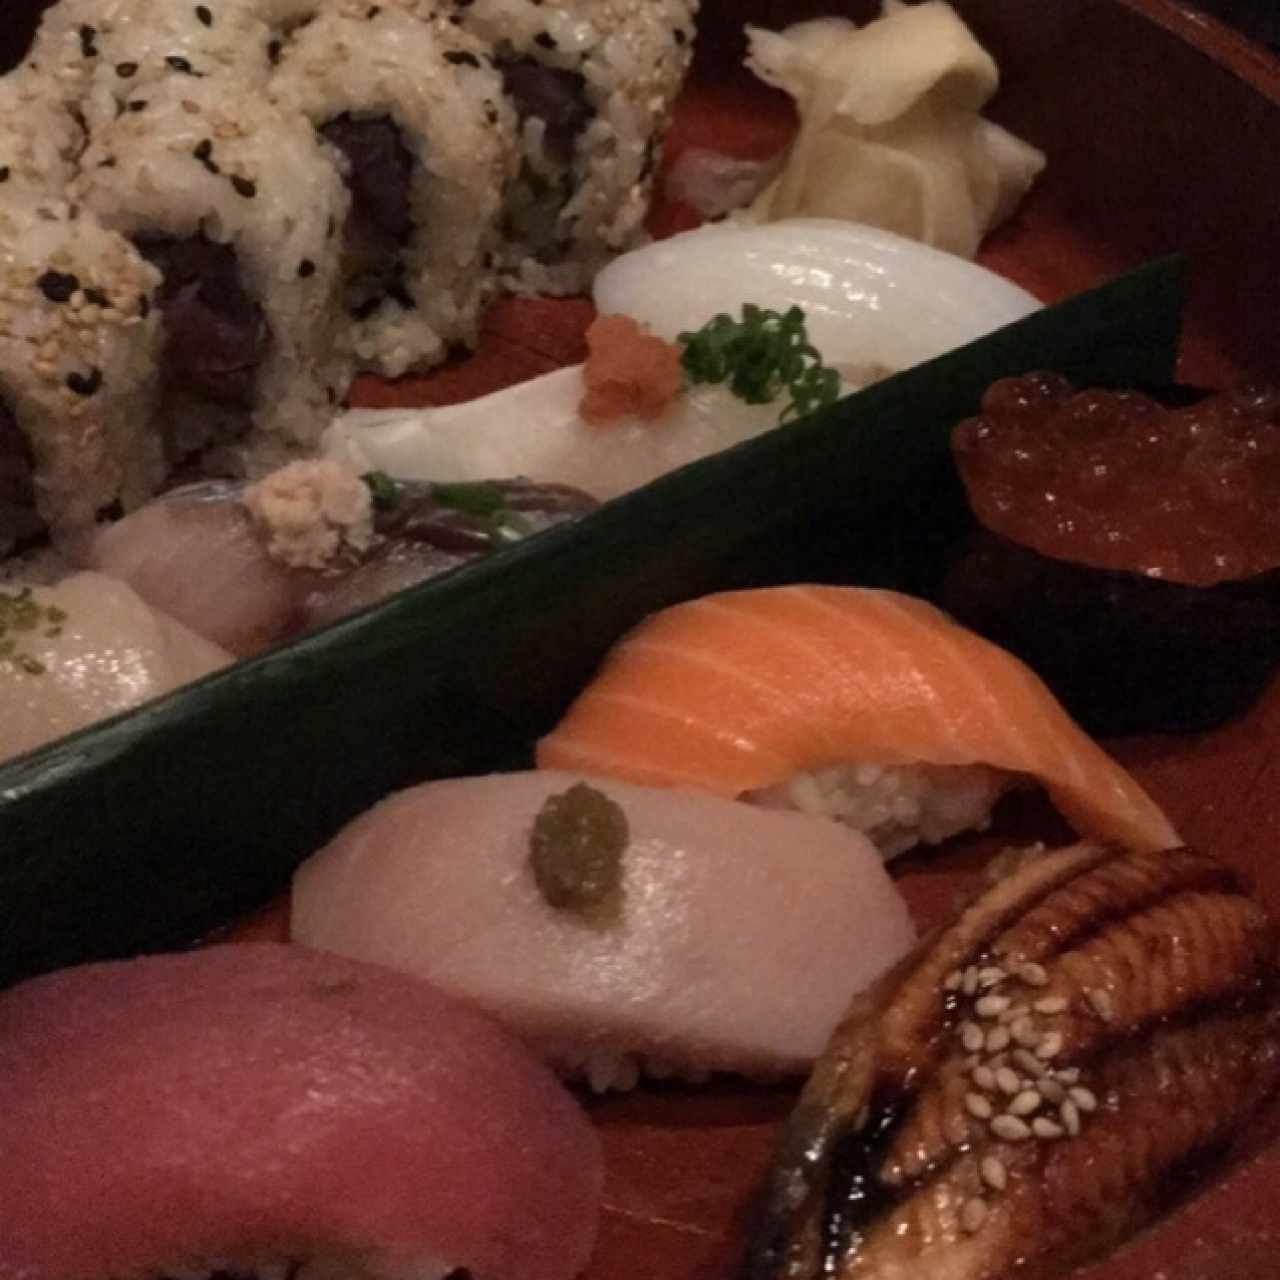 Sushi sampler